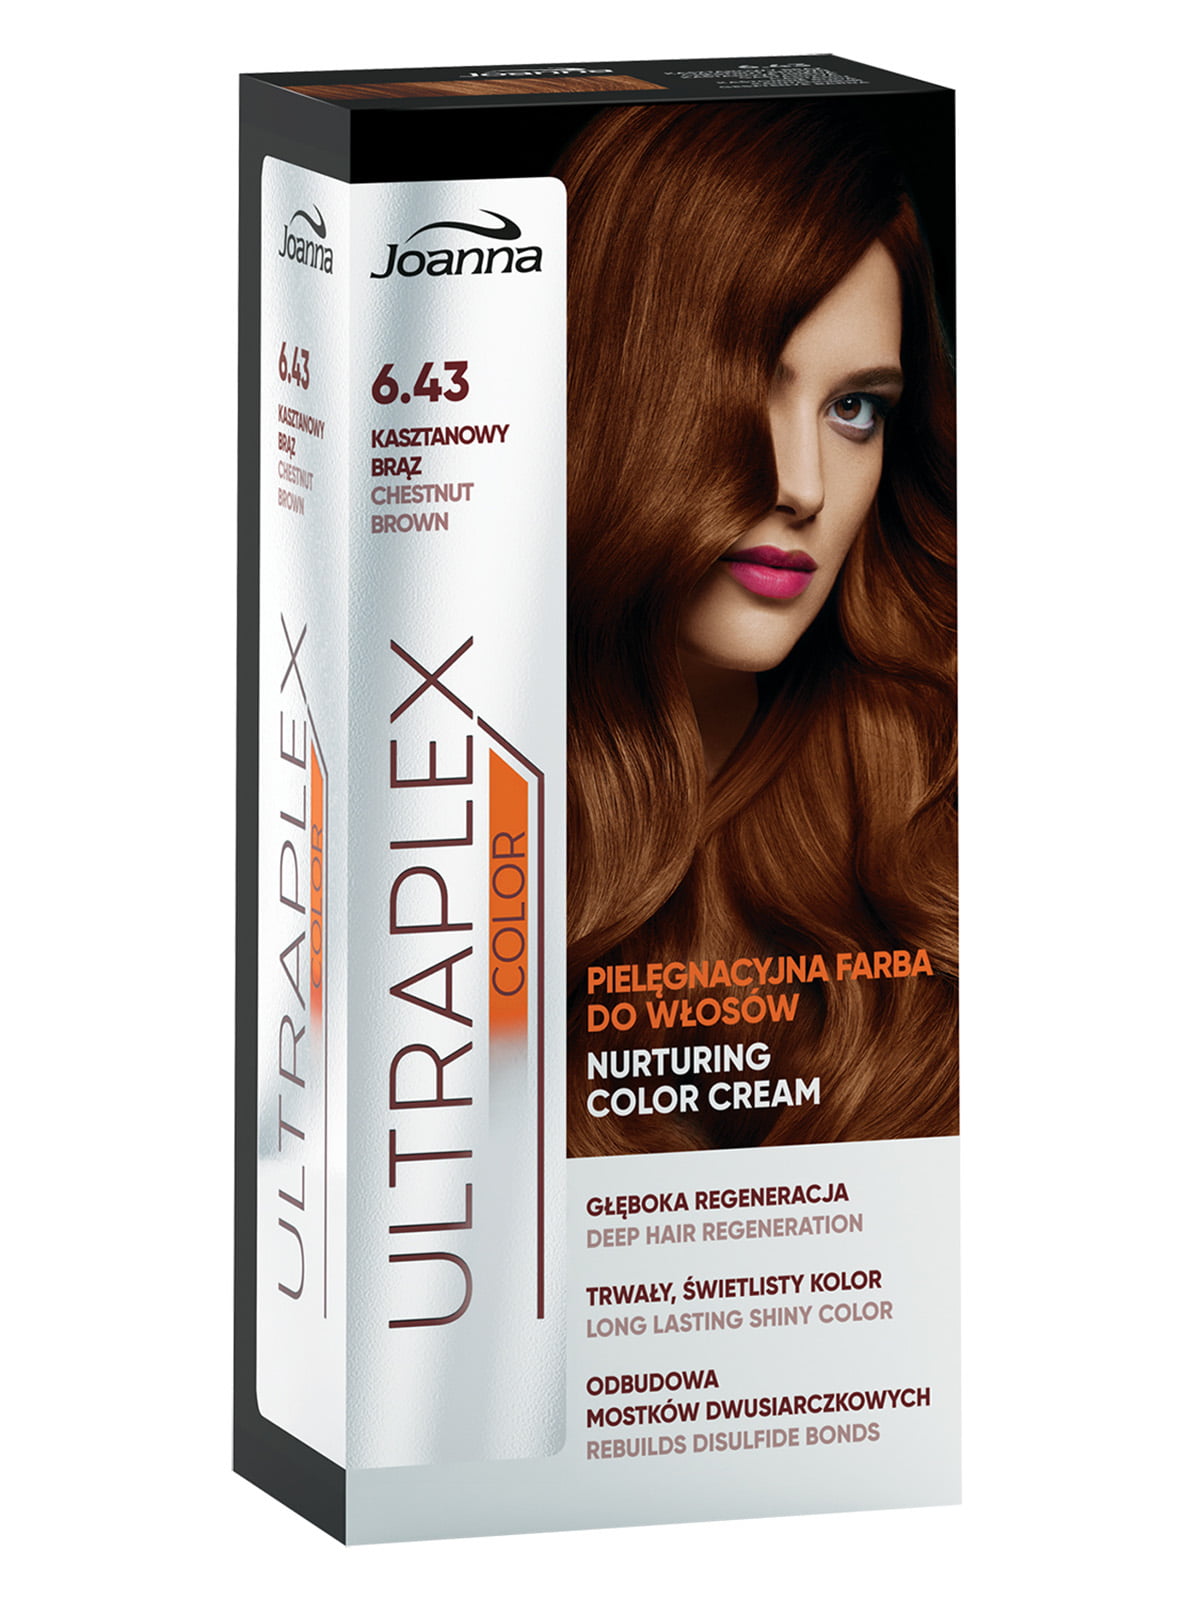 Набор для ухода за волосами joanna ultraplex